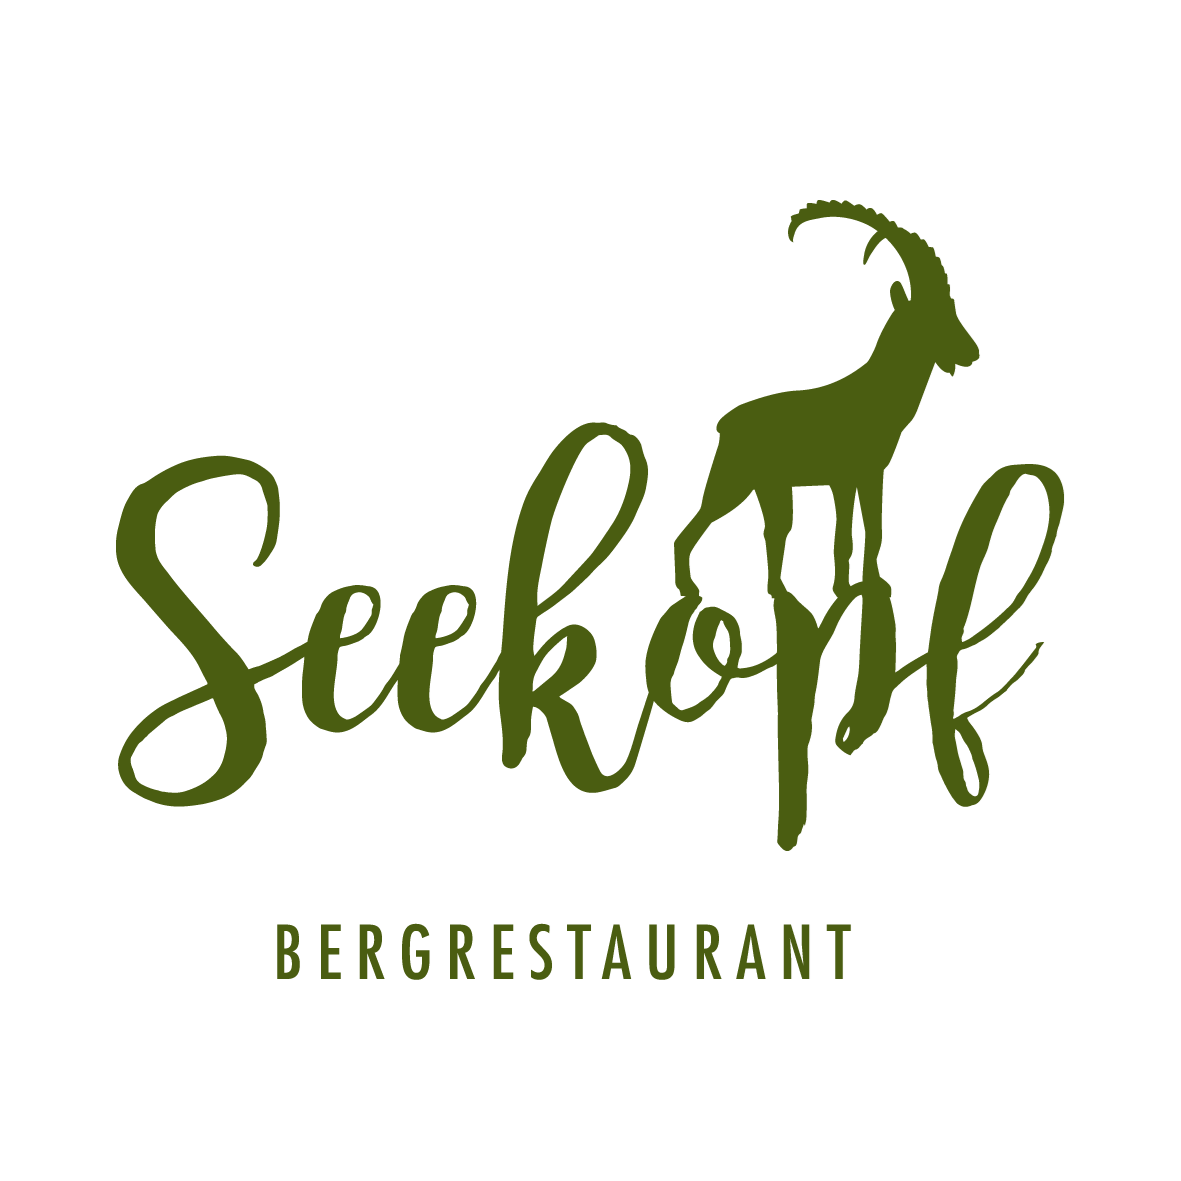 Seekopf, Mountain restaurant